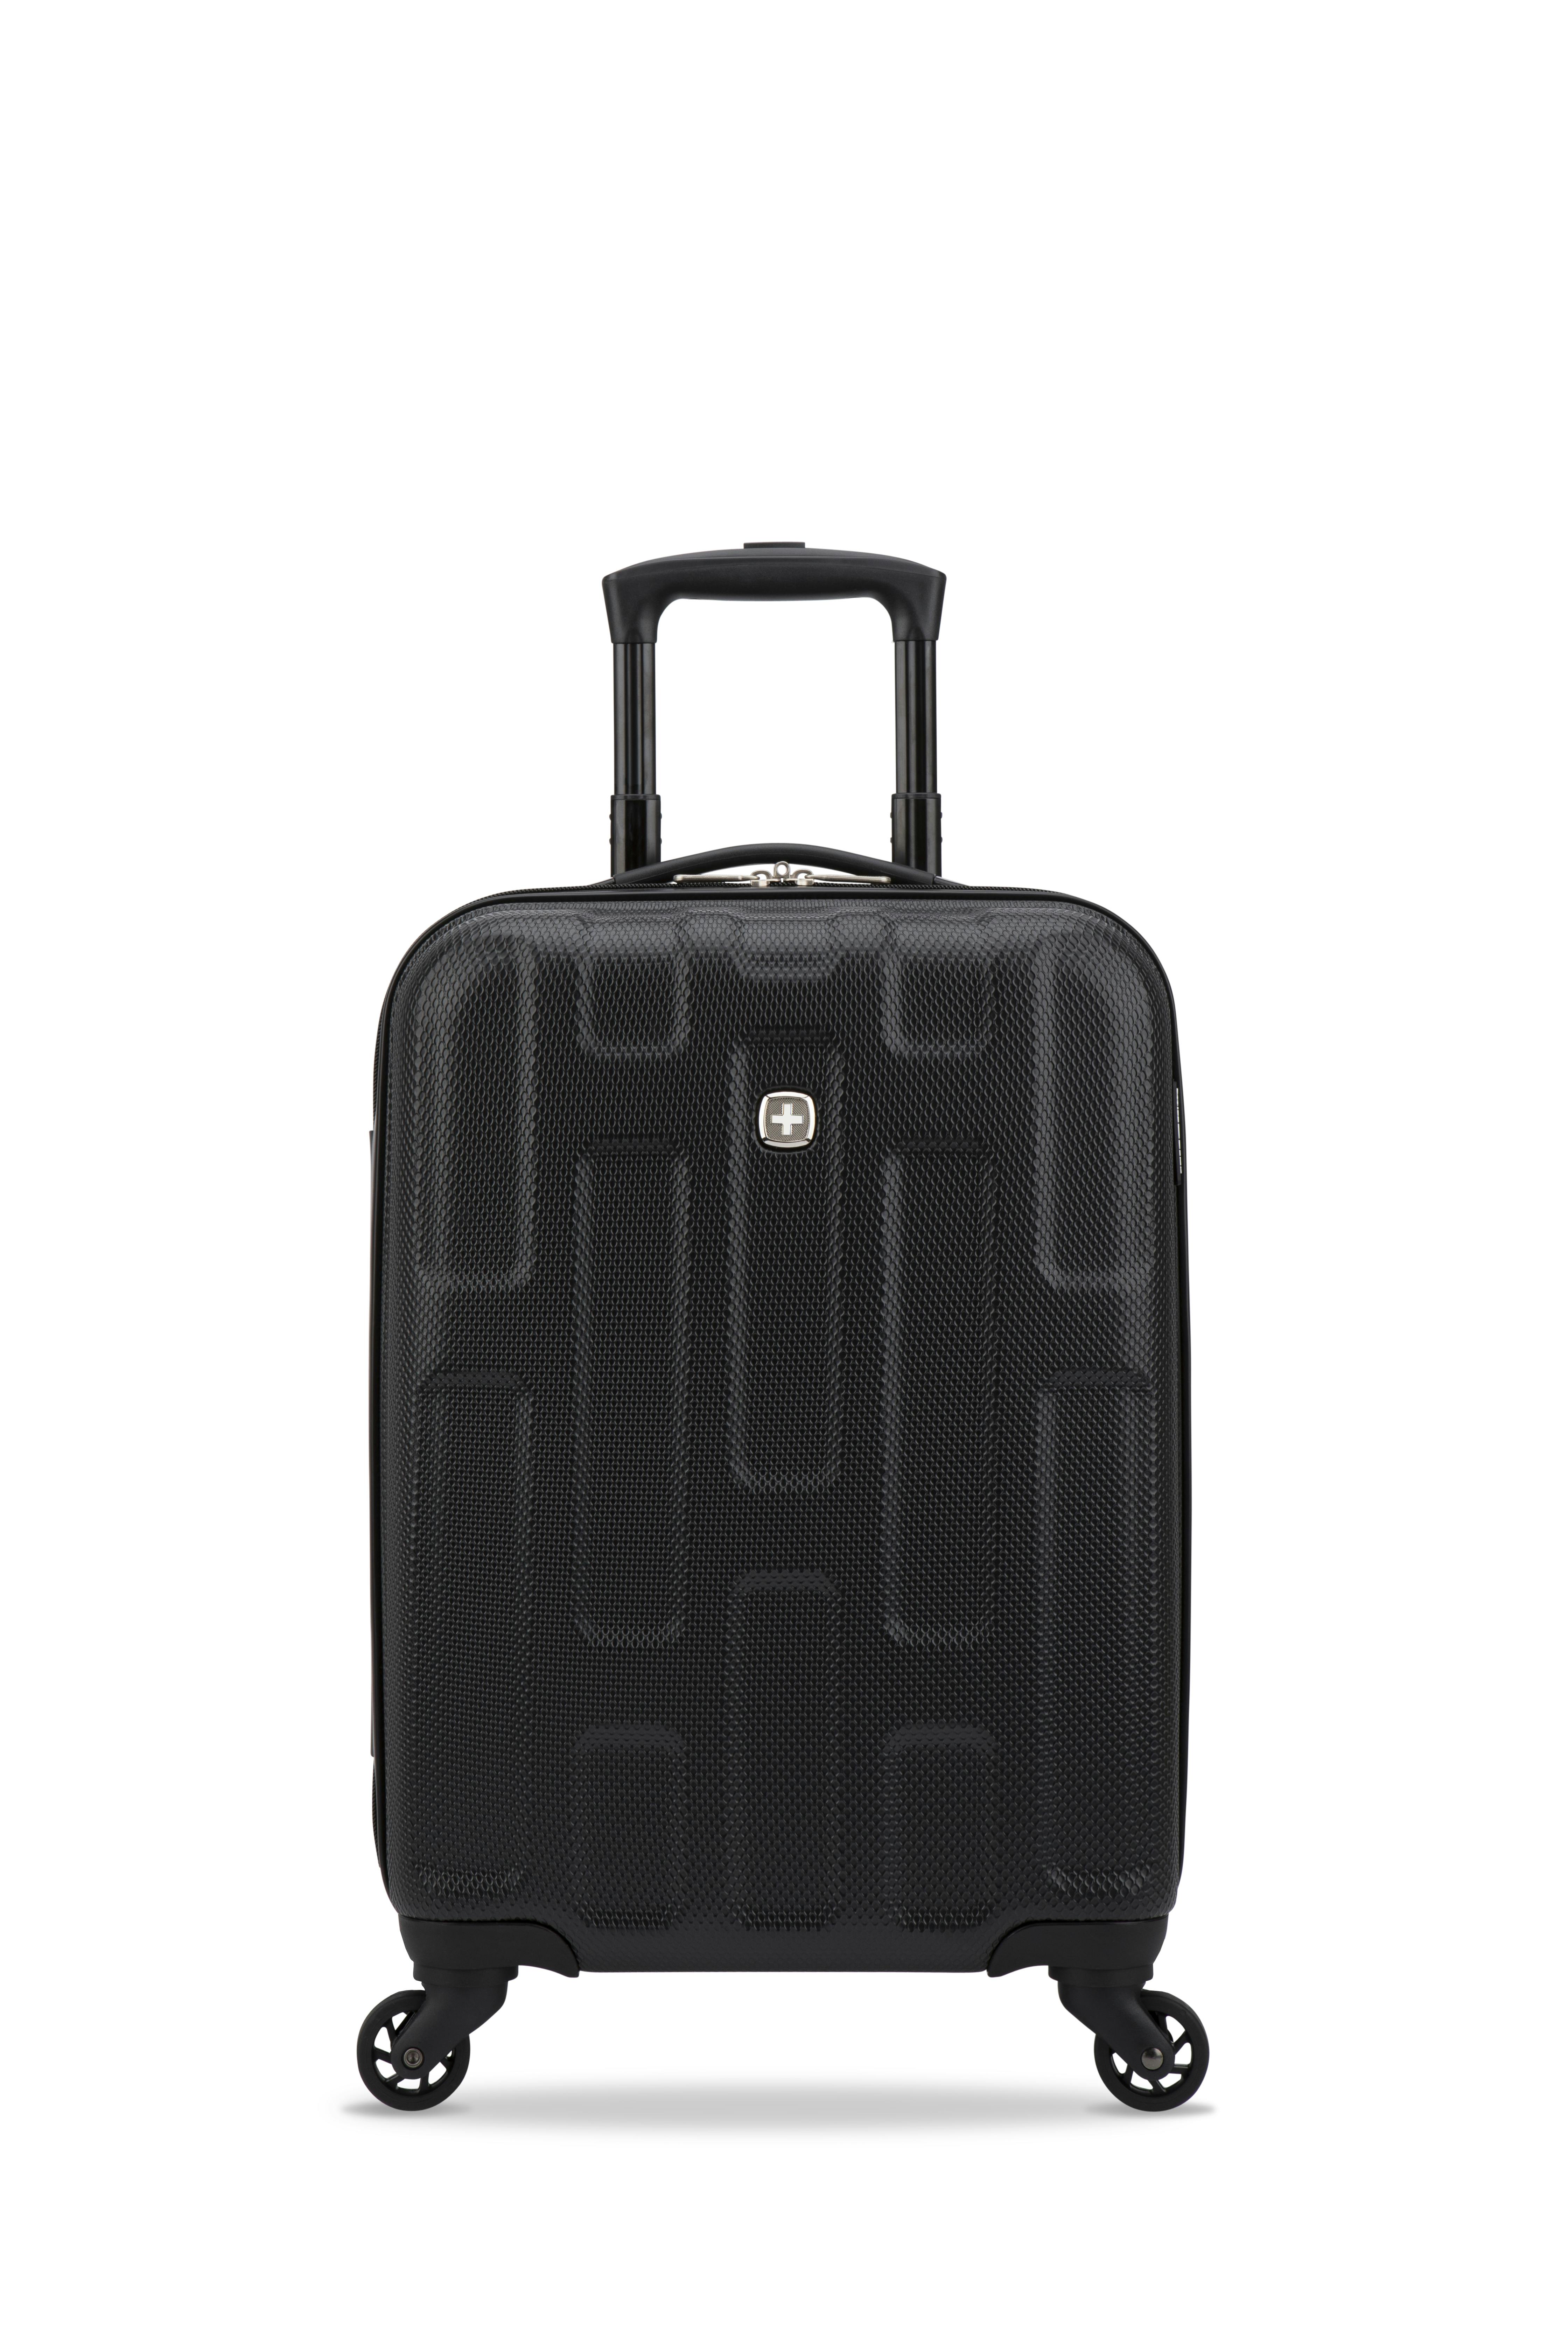 SWISSGEAR CANADA | Luggage, Luggage Sets, Travel Luggage, Carry Luggage, Swiss Gear bagages